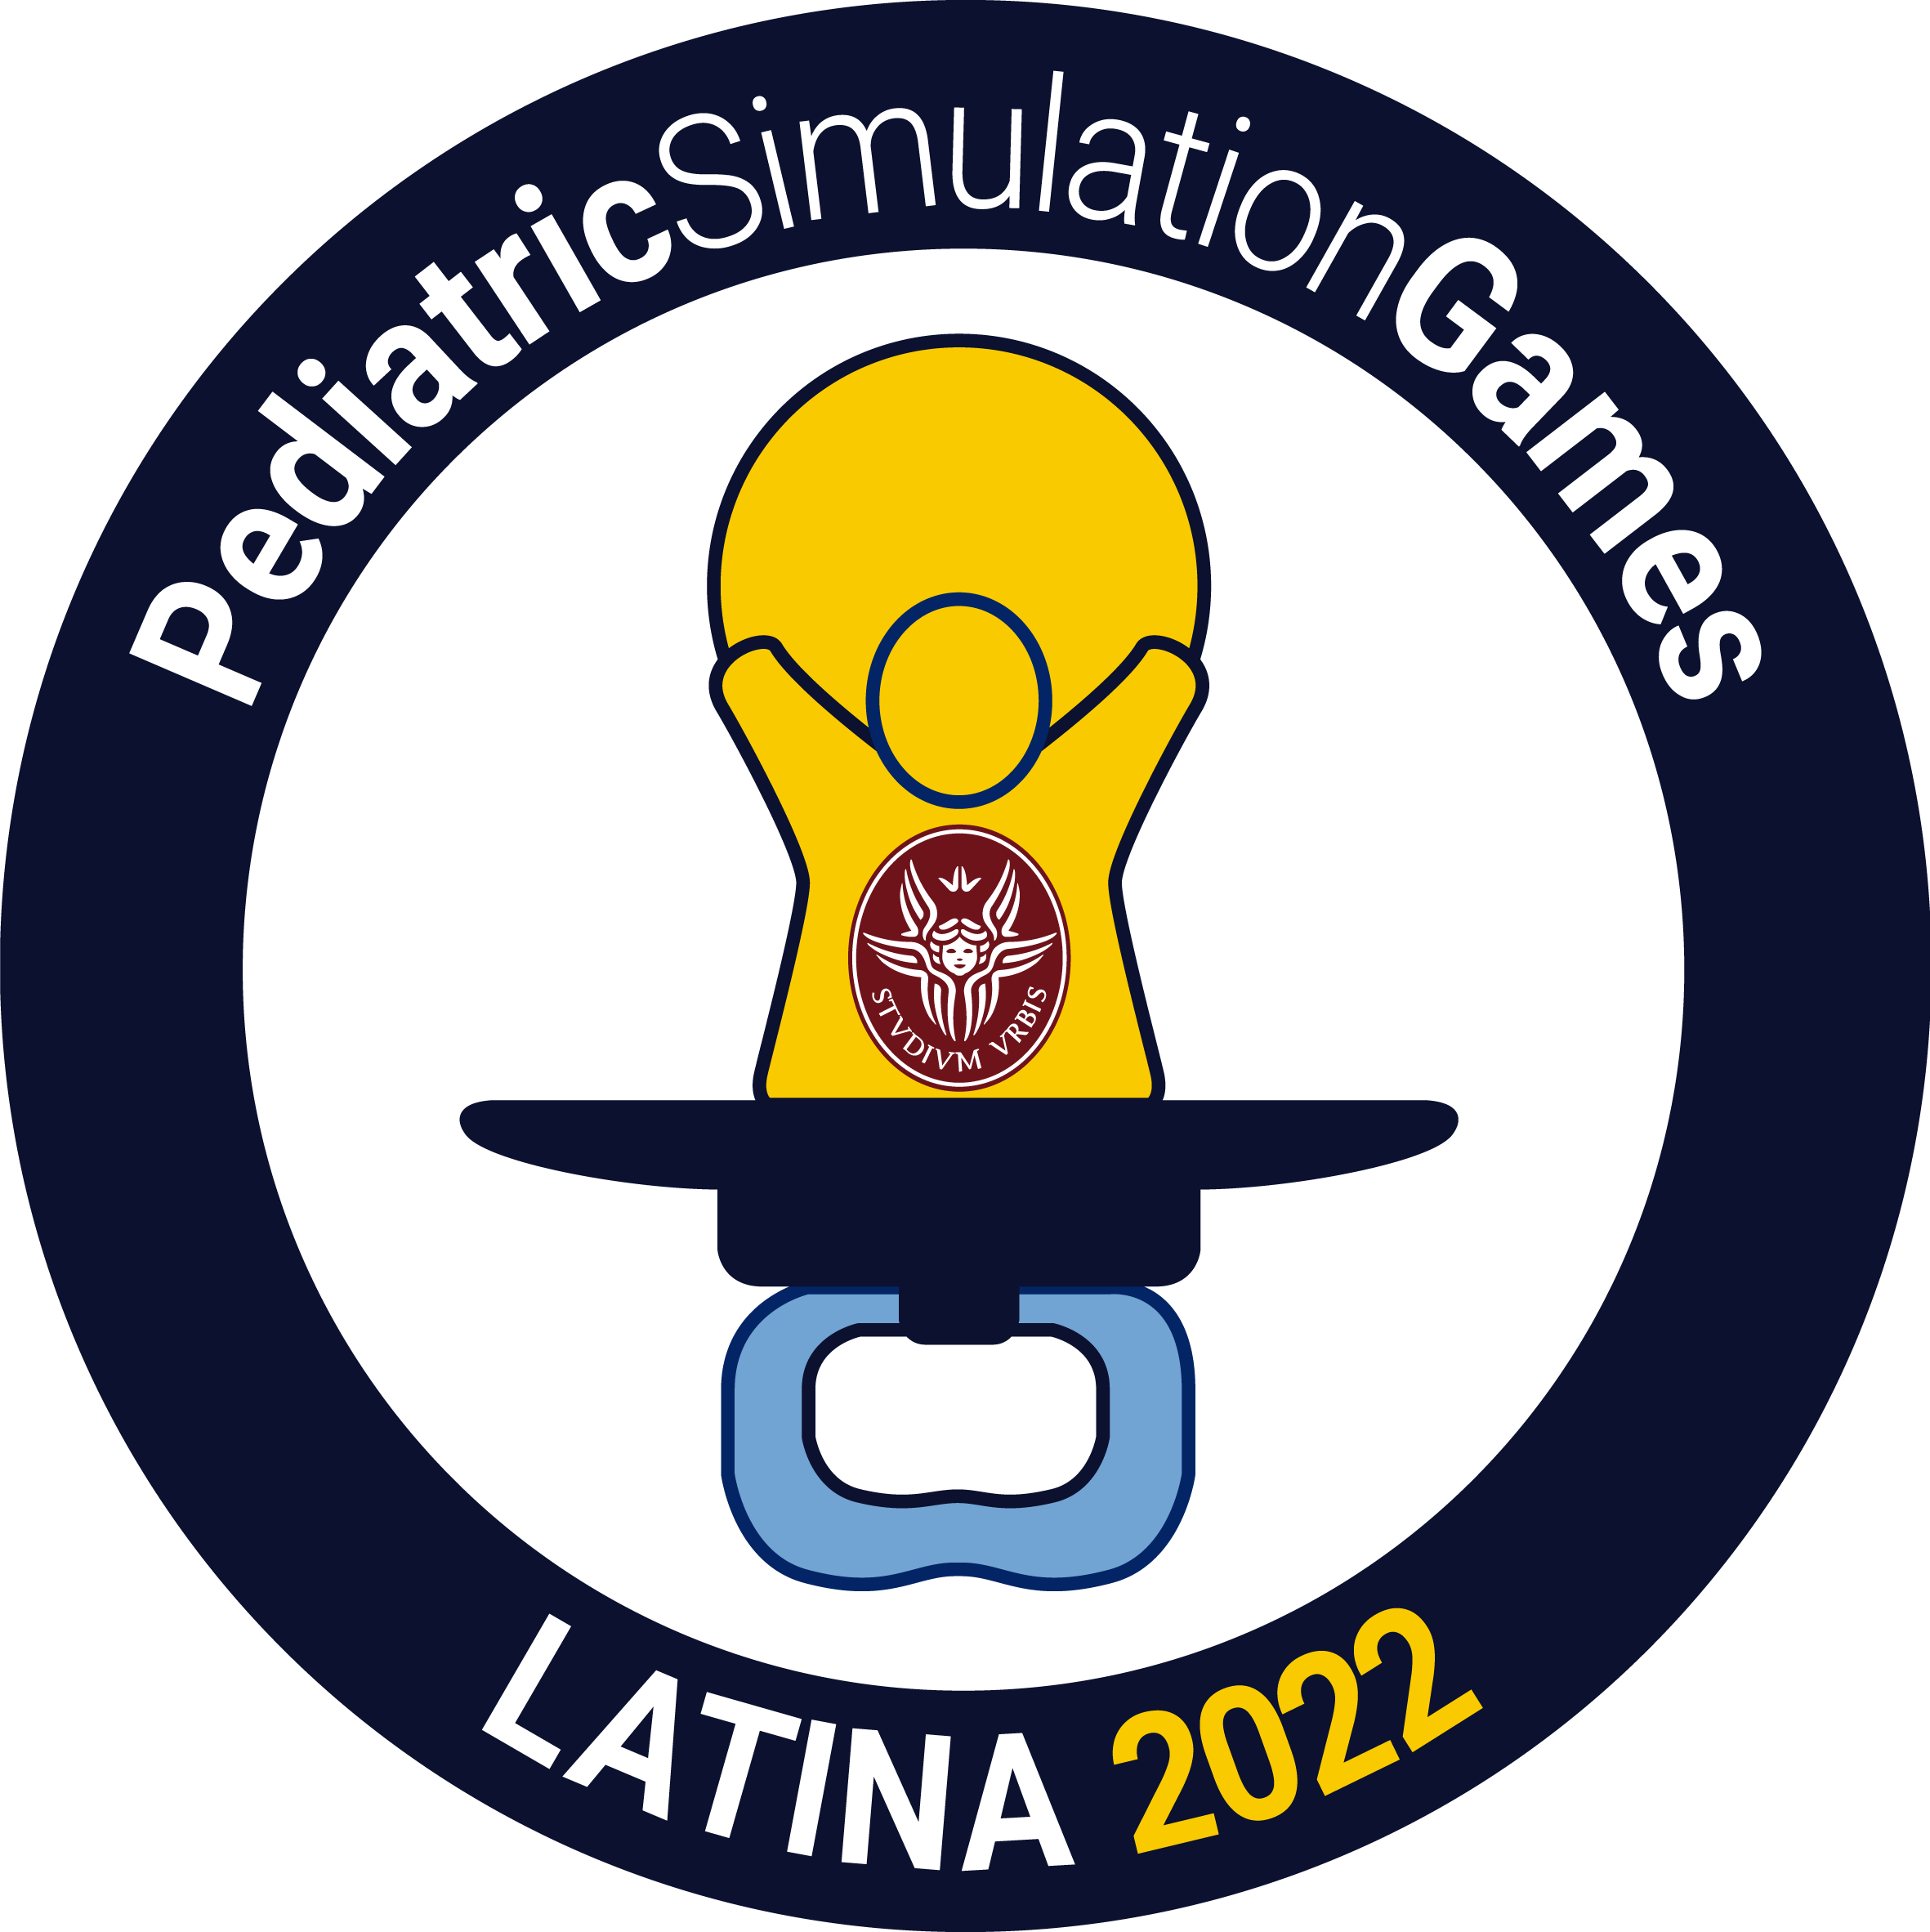 Programma Pediatric Simulation Games 2022